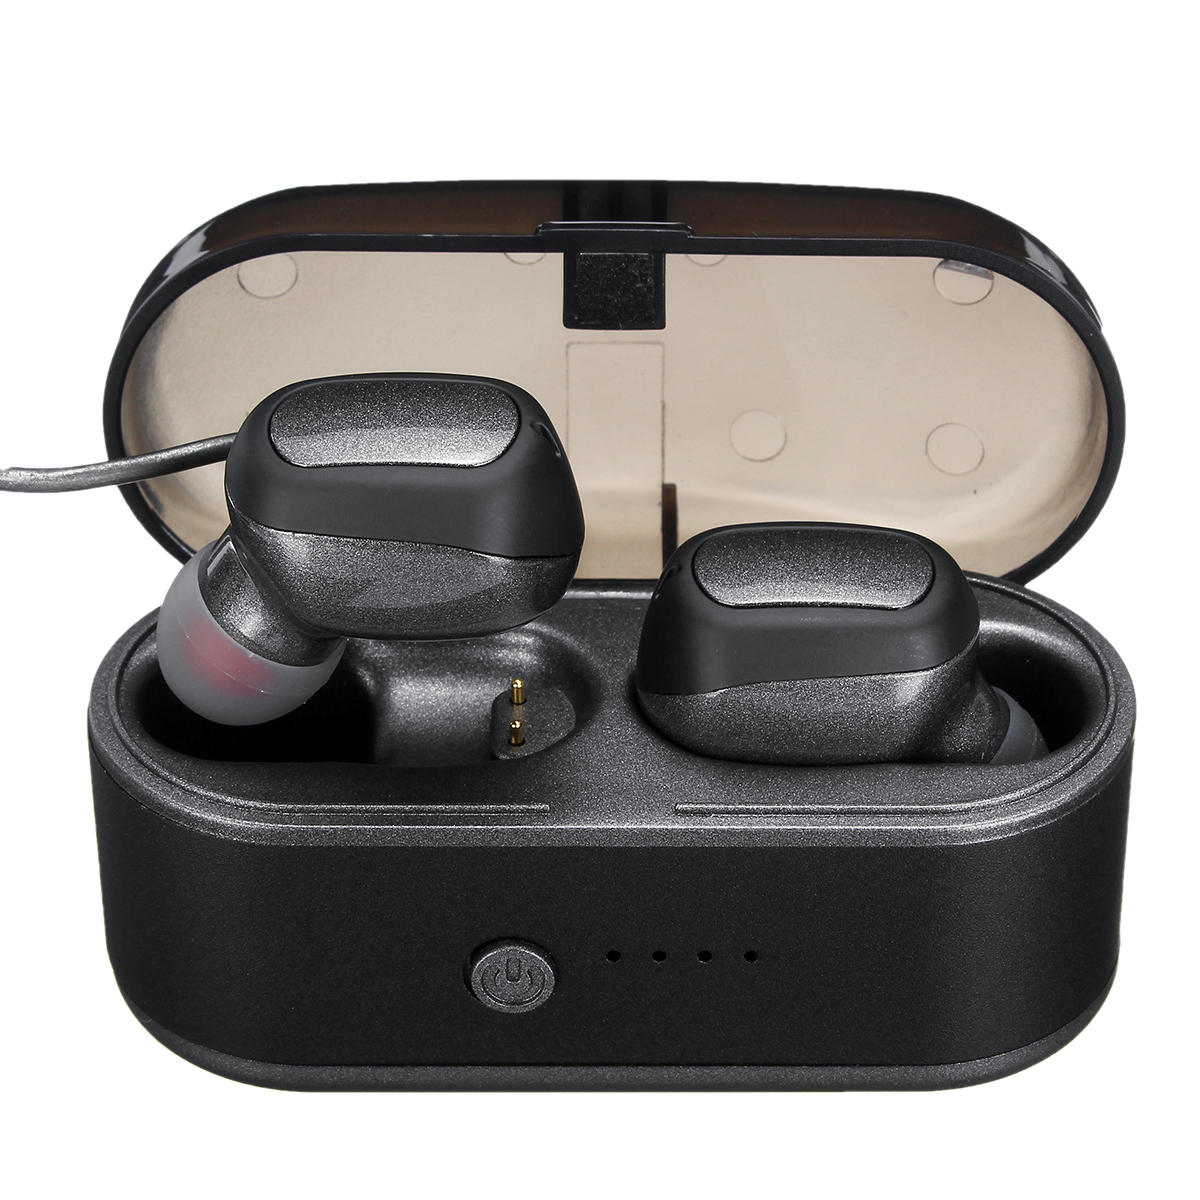 [bluetooth 5.0] TWS Mini Wireless Earbuds Earphone CVC 8.0 Noise Cancelling Bass Stereo IPX5 Waterproof Headphones COD